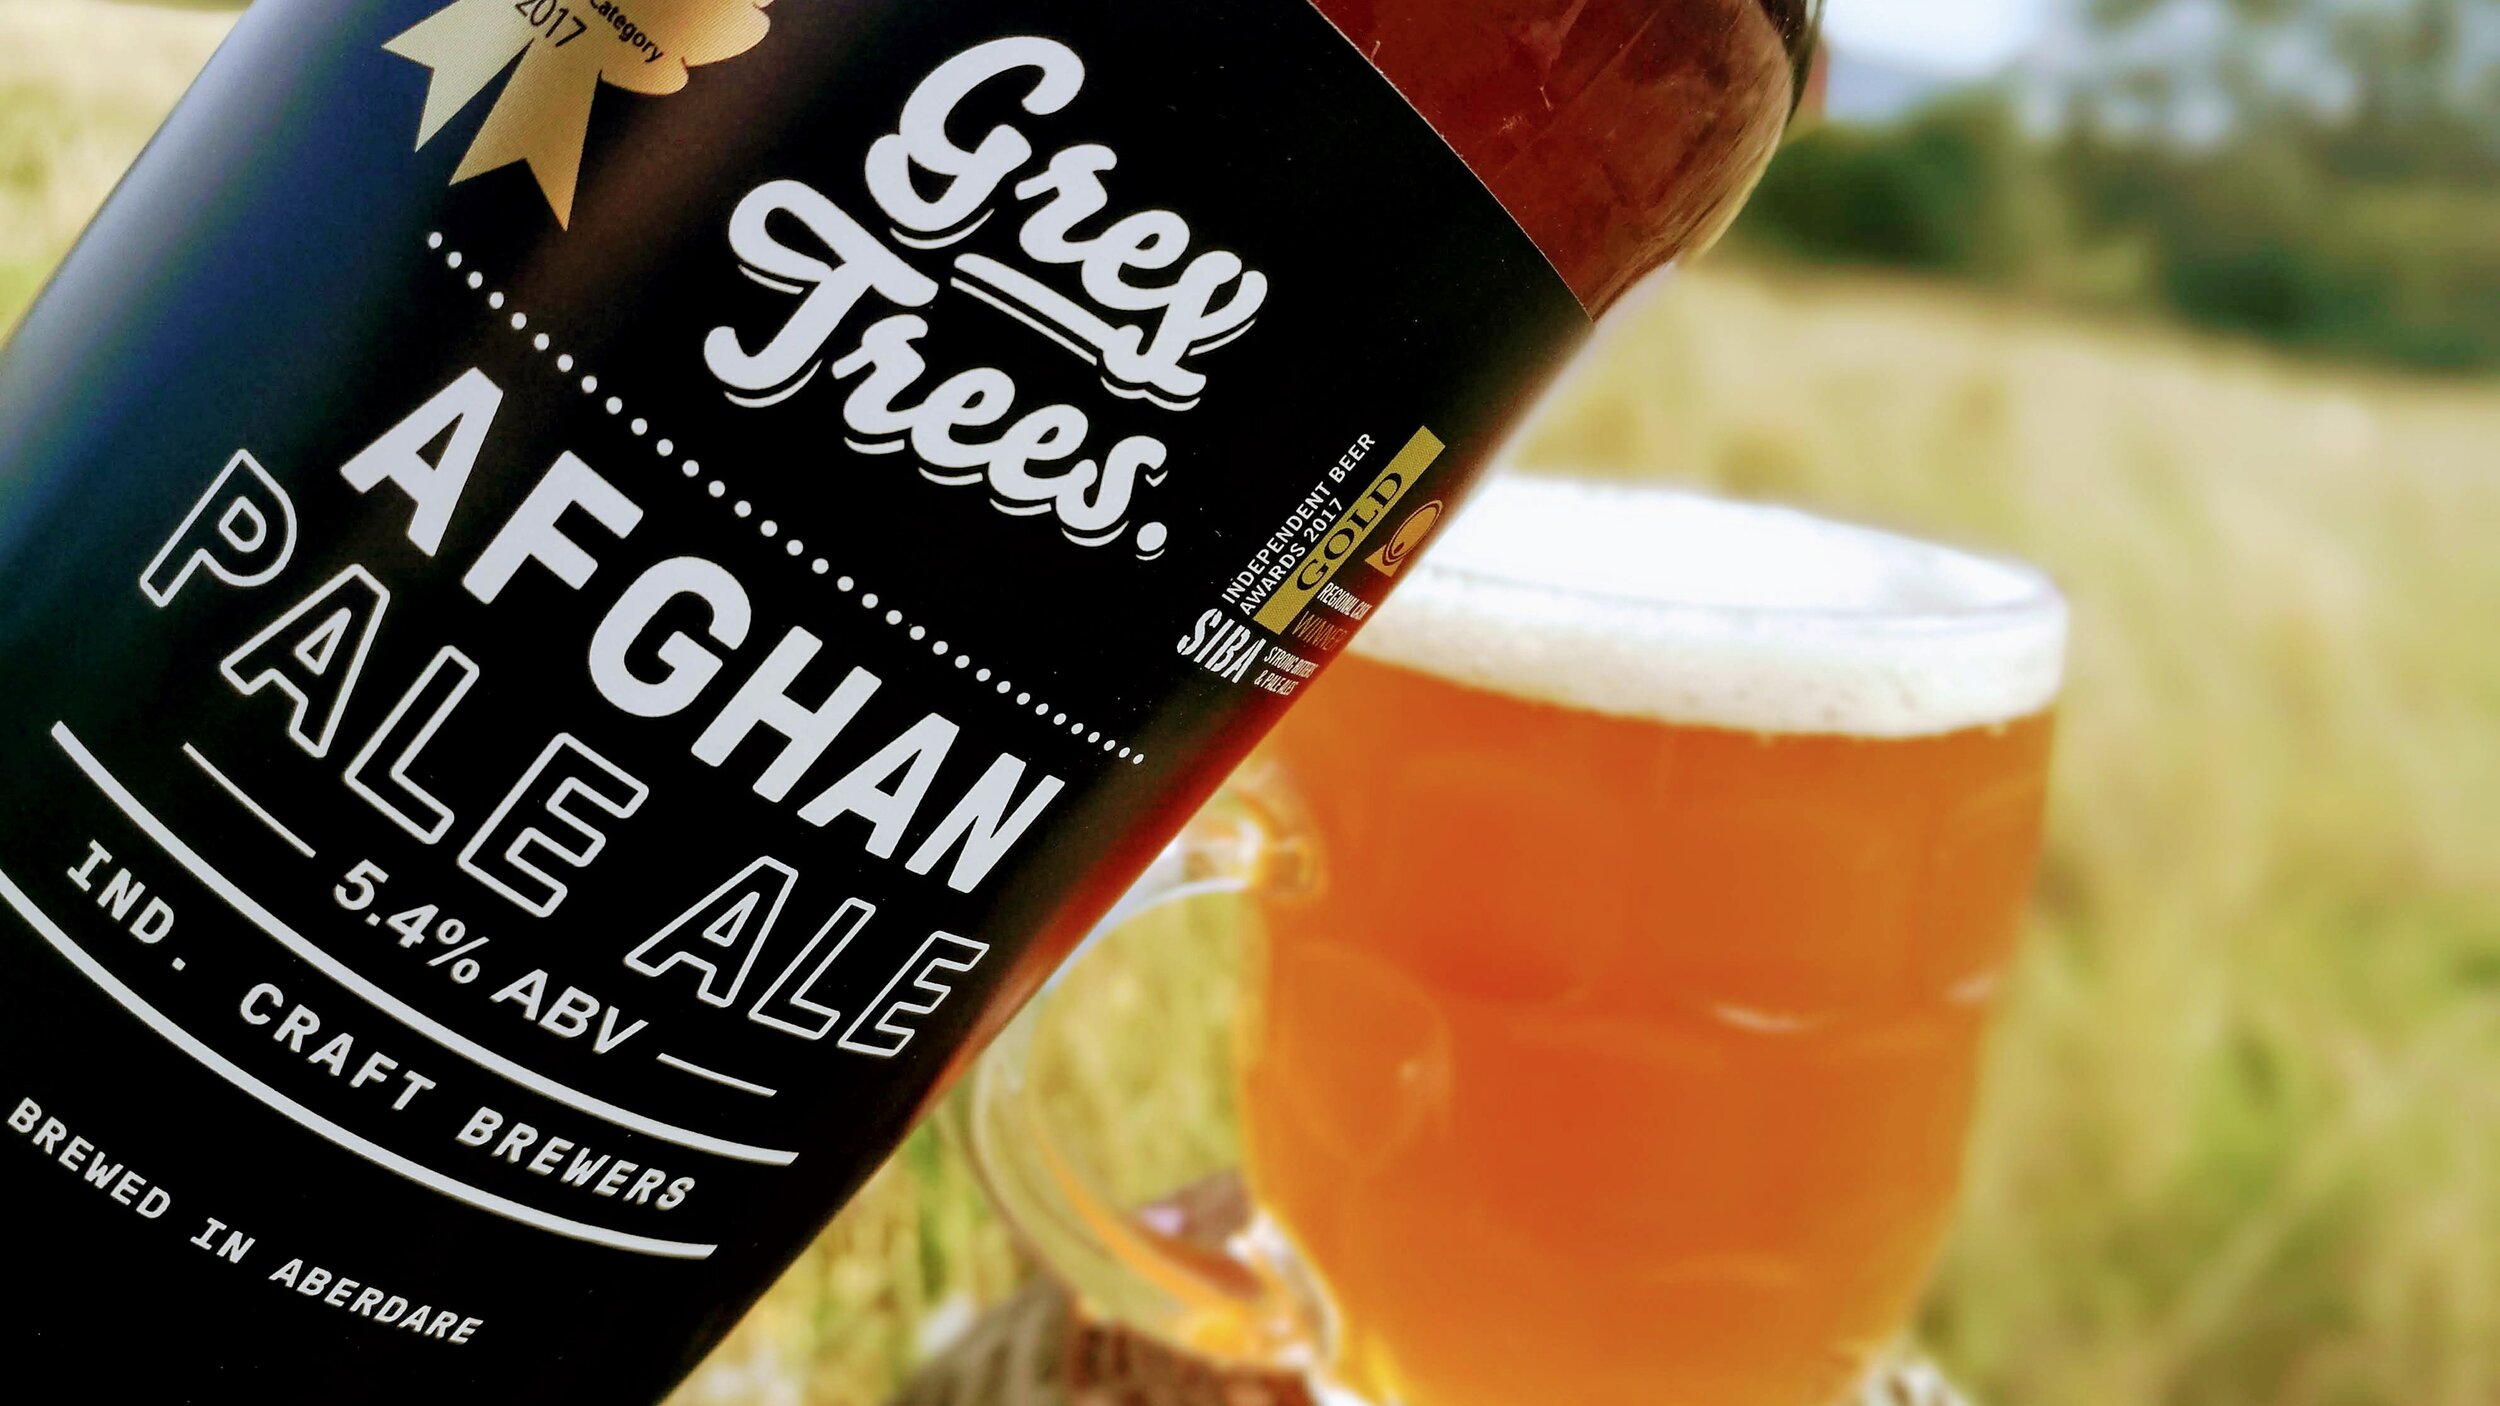 Grey Trees Brewery, in Aberdare, afghan pale ale review, beer yeti